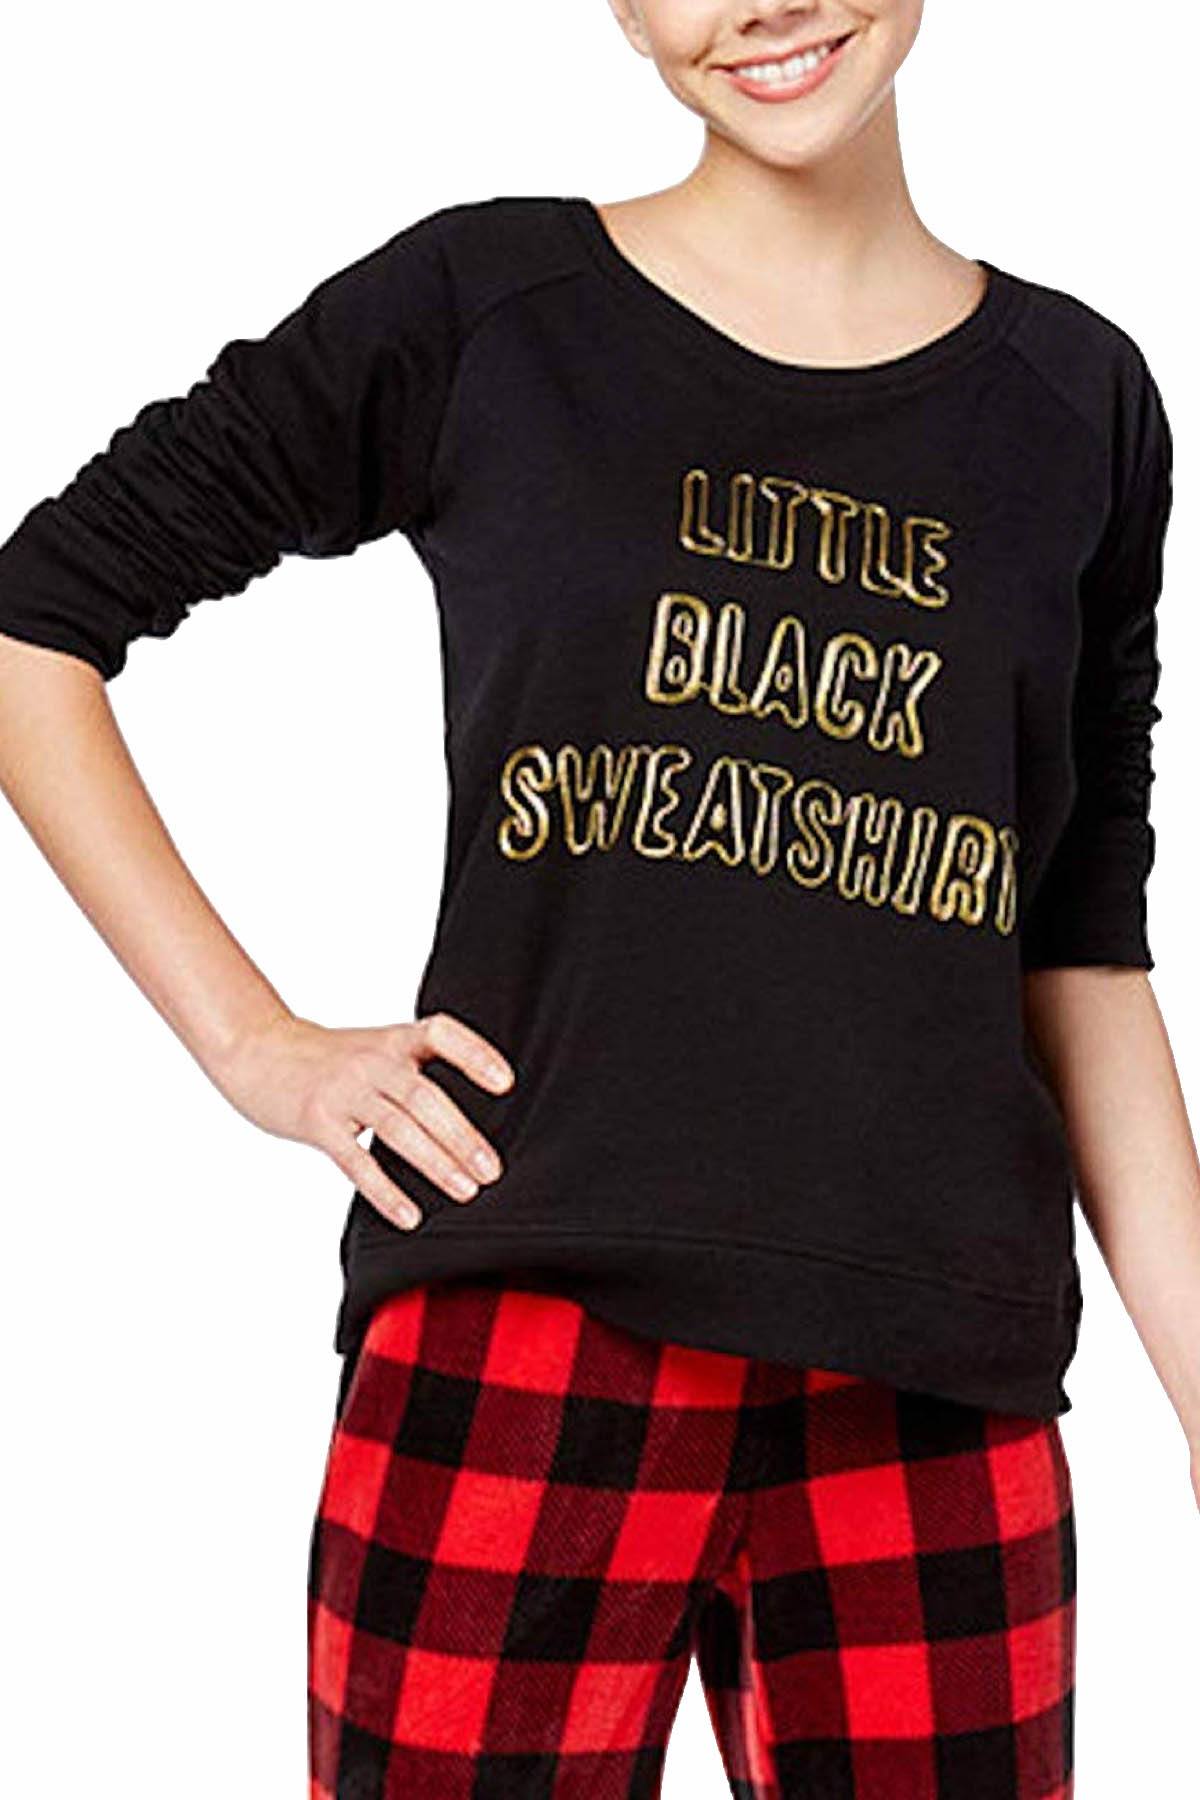 Jenni Graphic Comfy Lounge Top in Little Black Sweatshirt